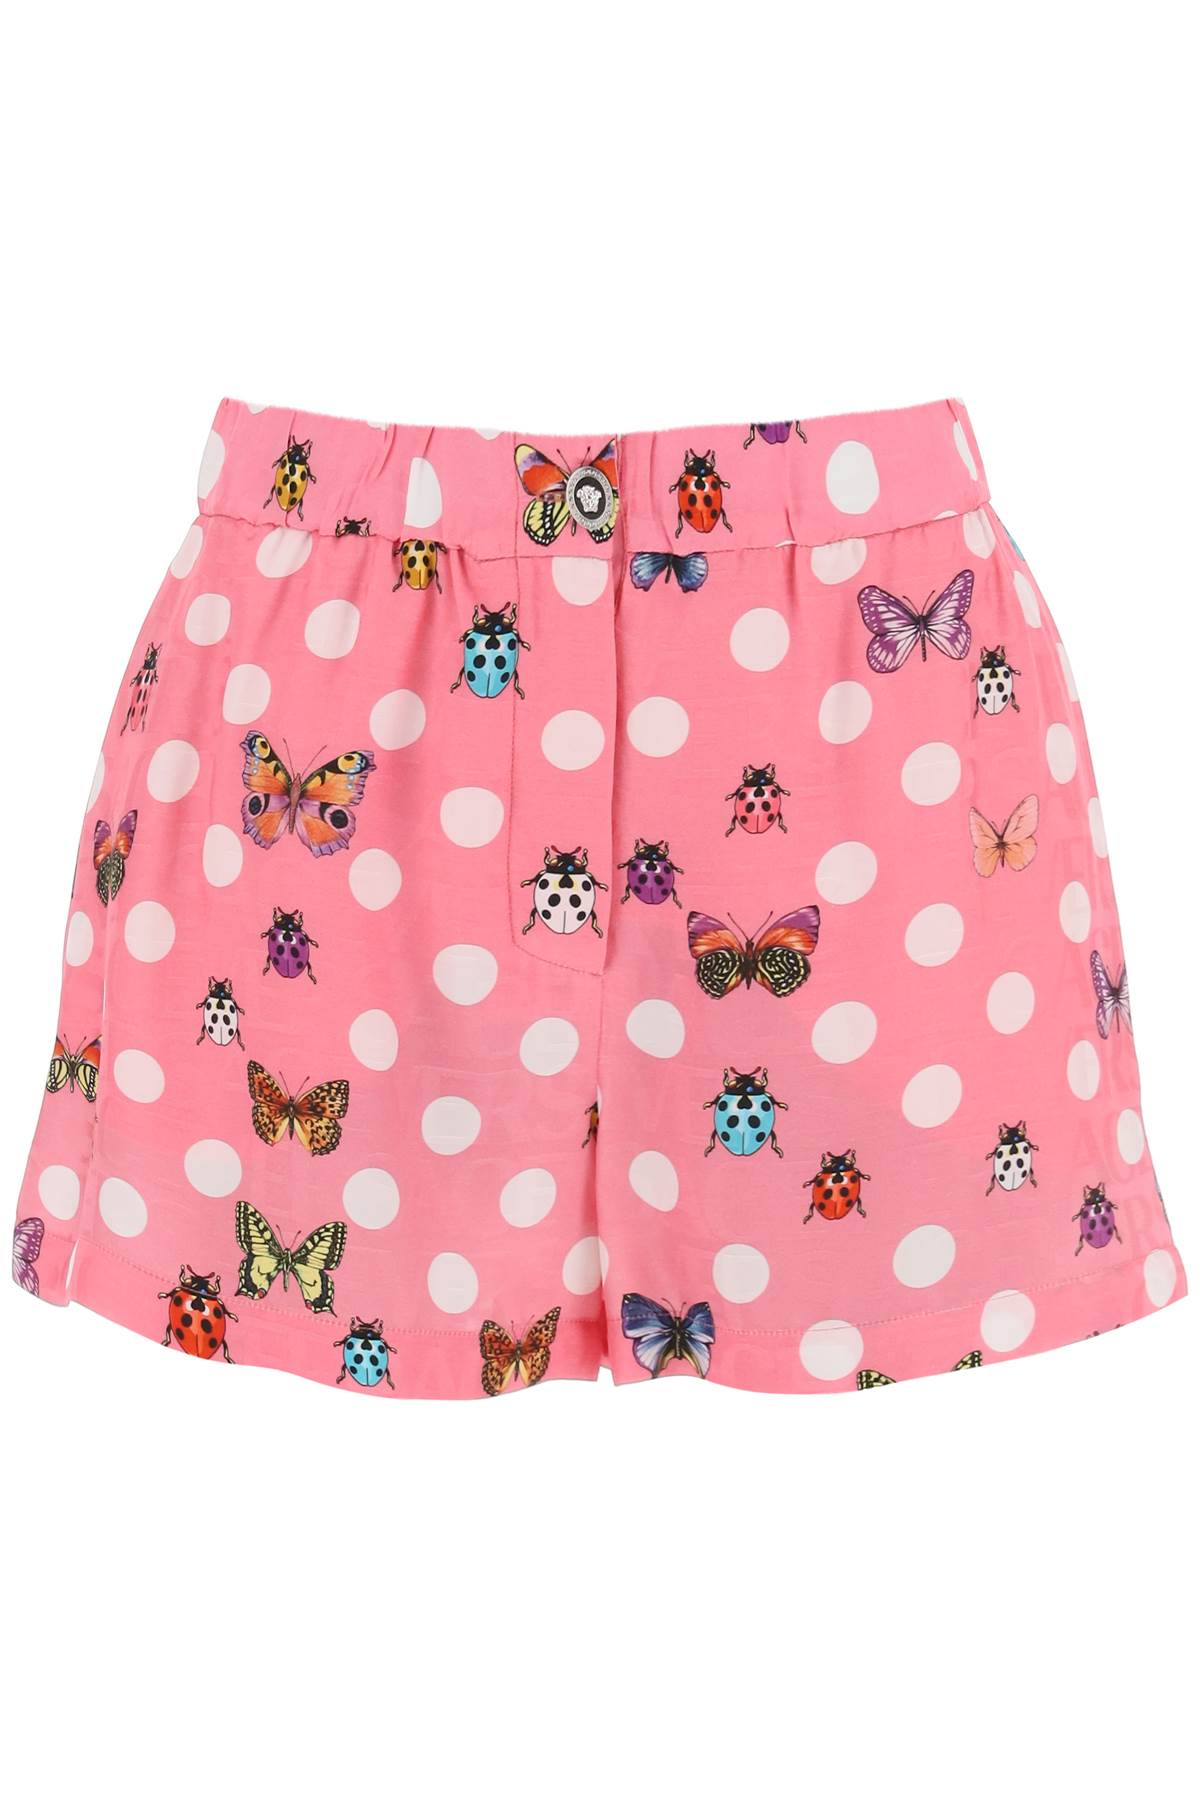 Versace butterflies&ladybugs polka dot shorts-0